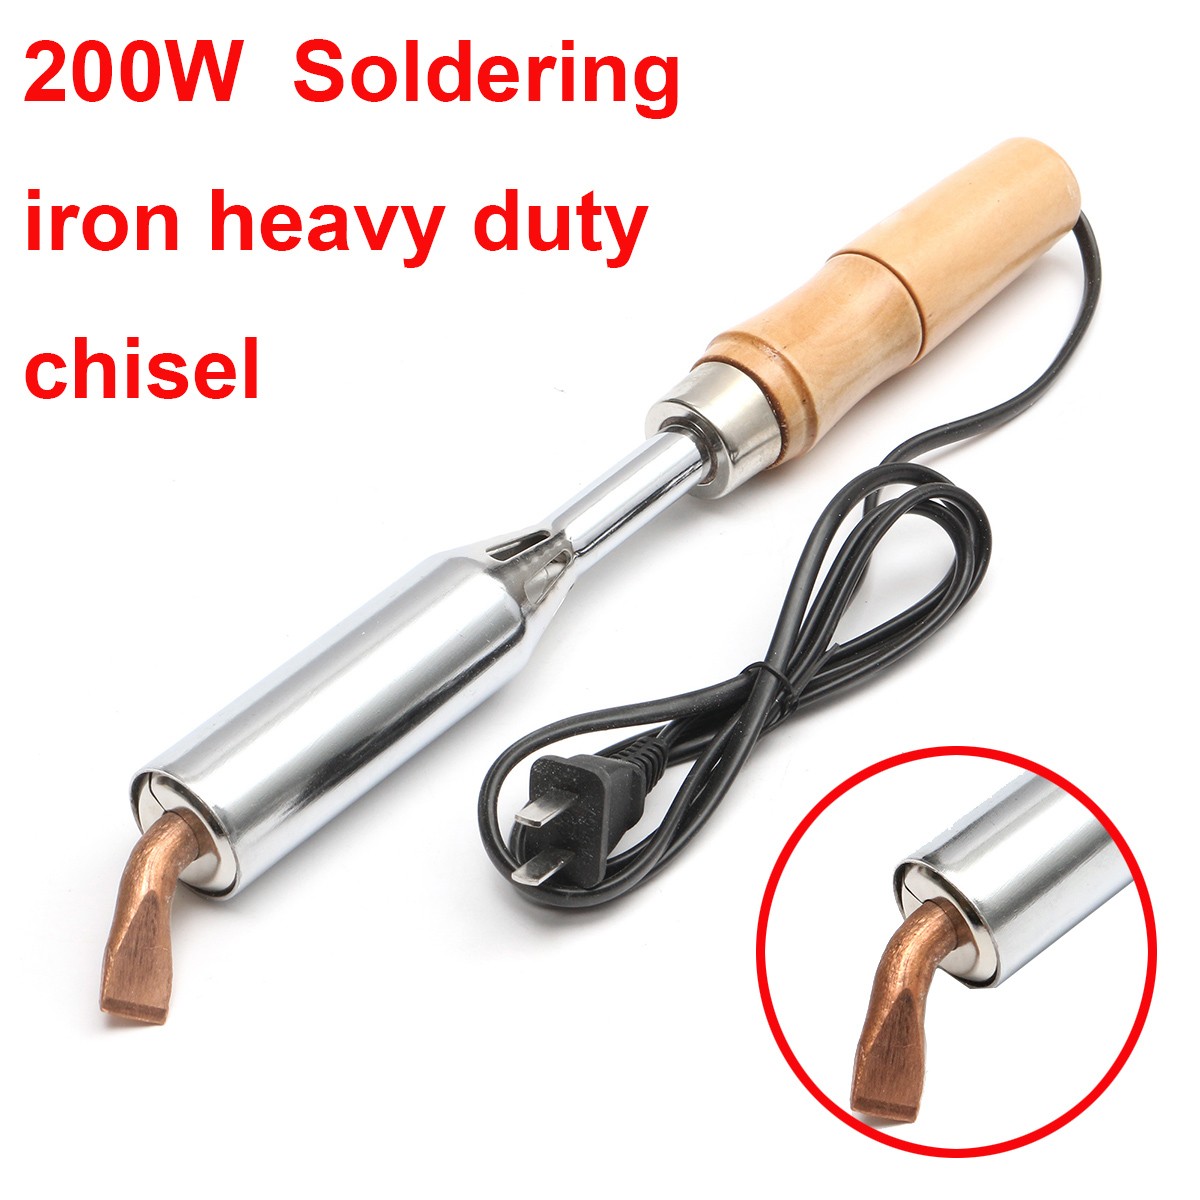 200W-Soldering-Iron-Heavy-Duty-Chisel-Point-200-Watt-Craft-Tools-AC-220V-1113708-1